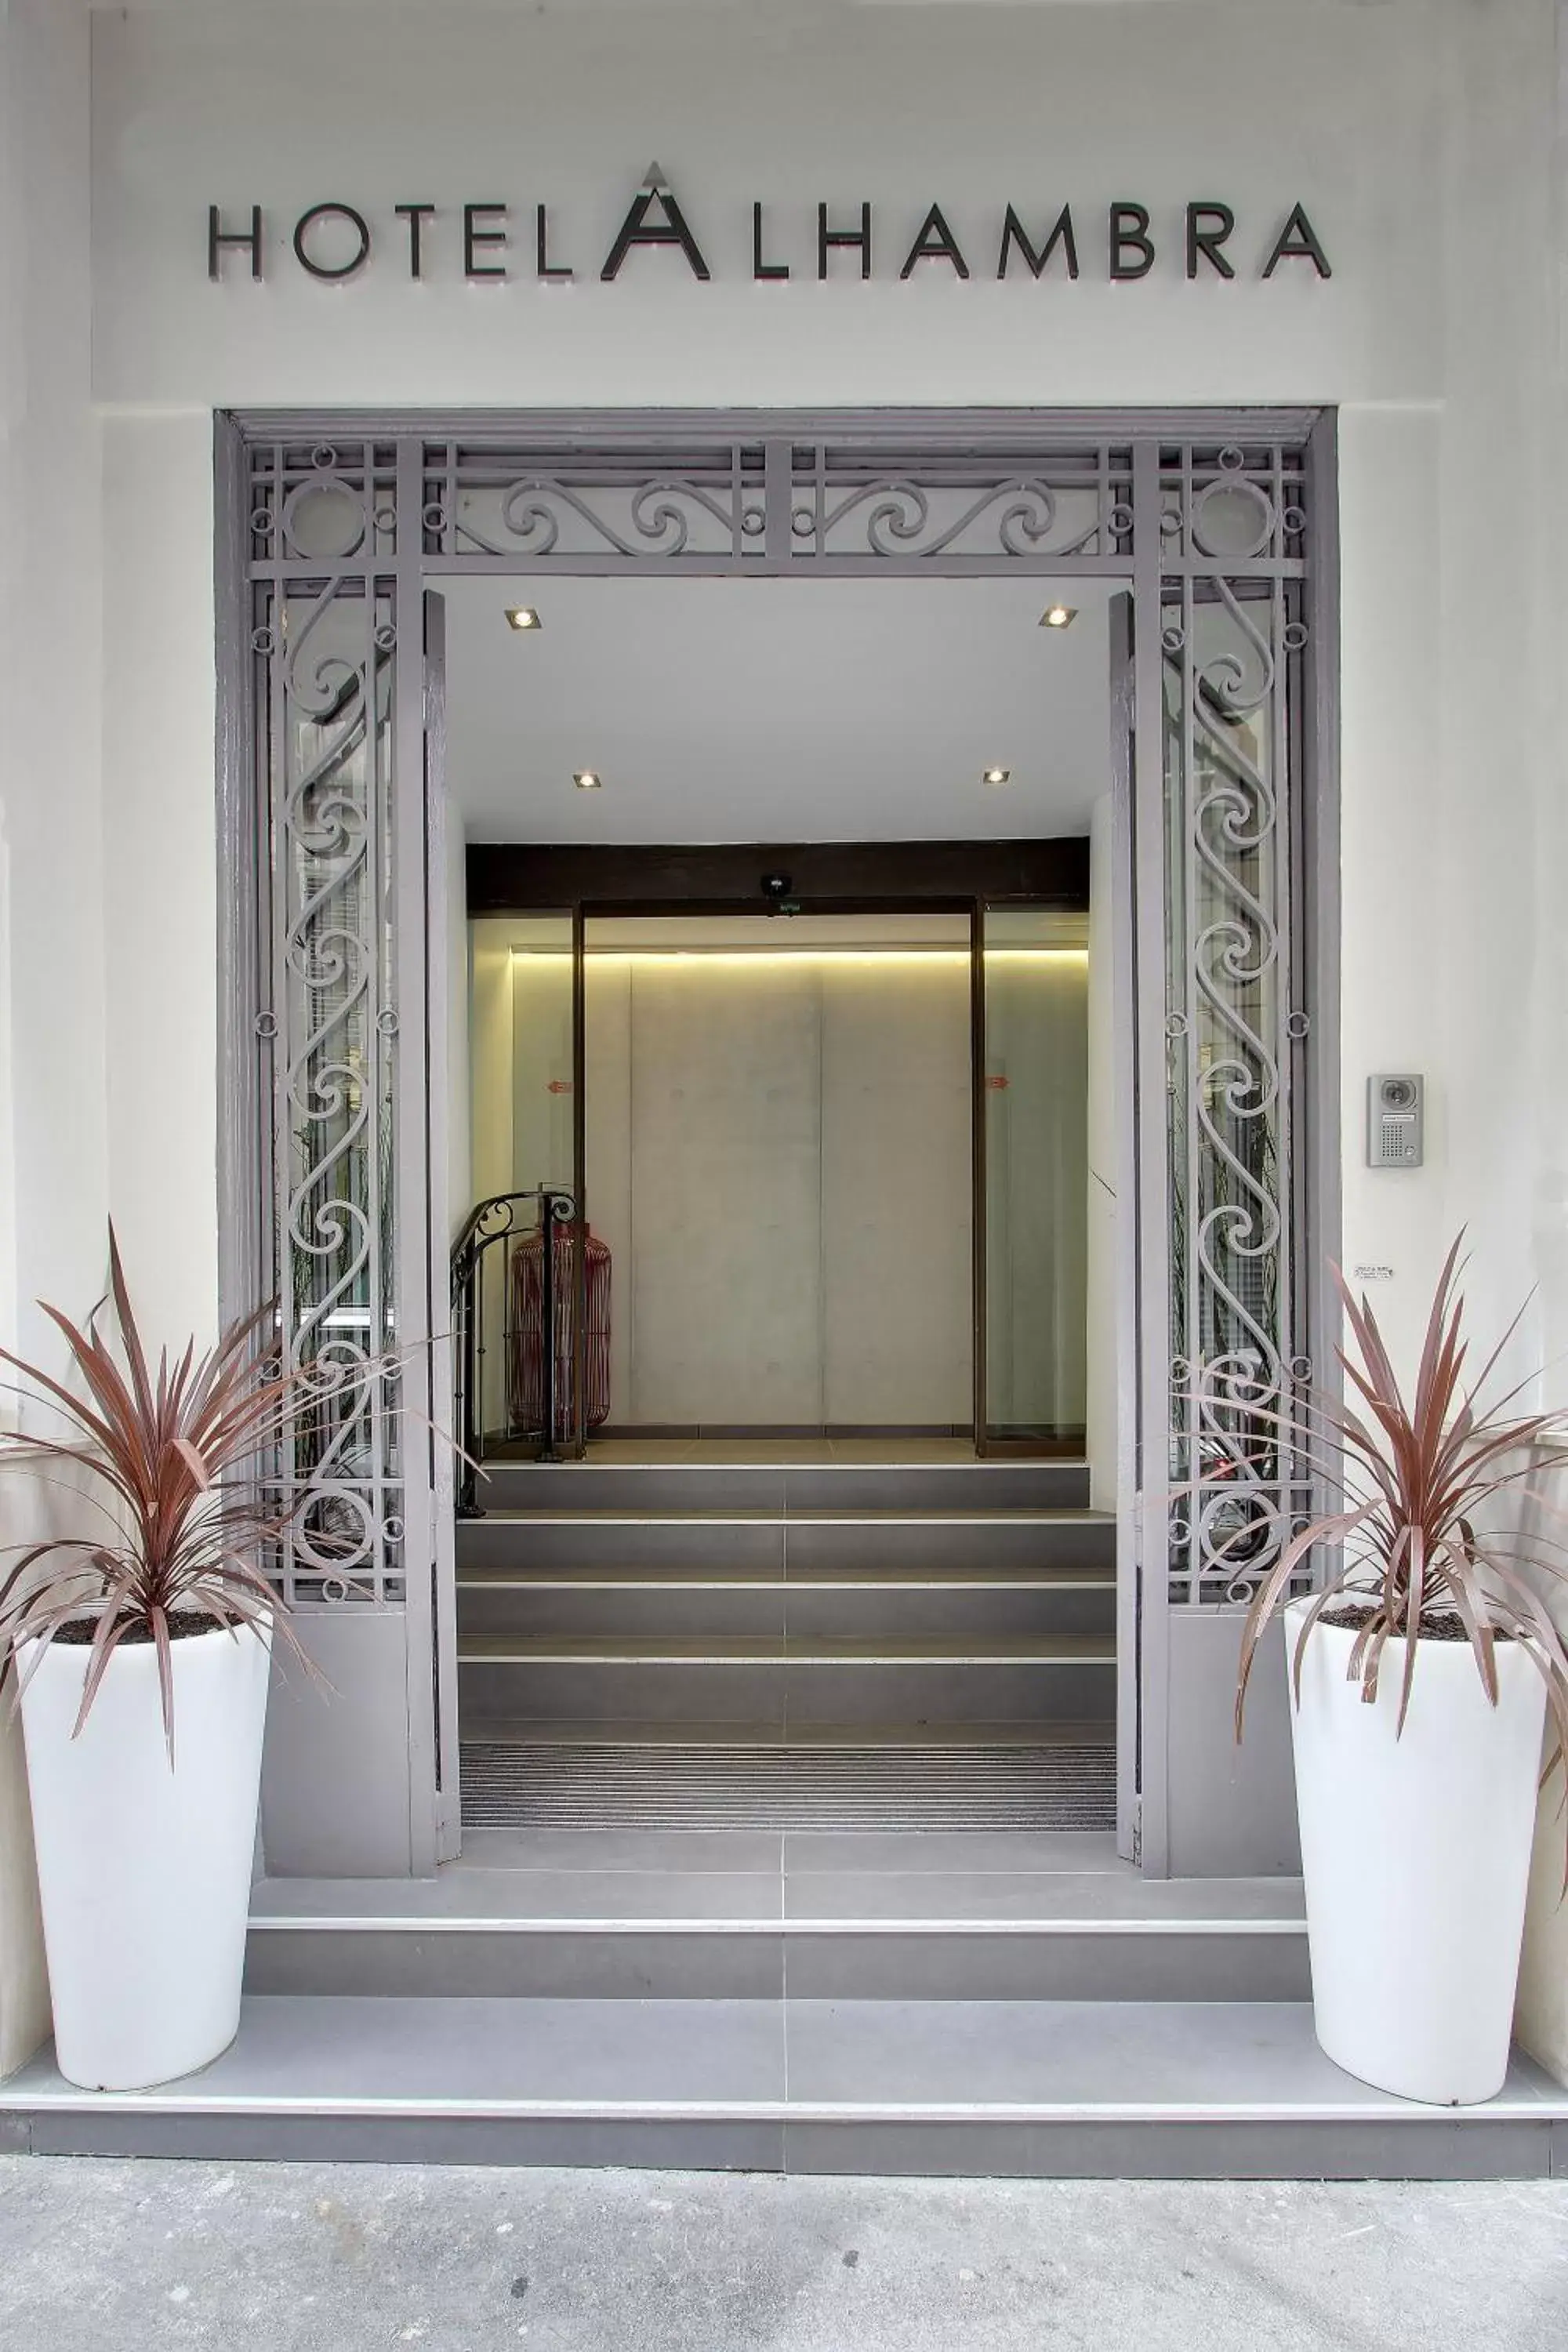 Facade/entrance in Hotel Alhambra